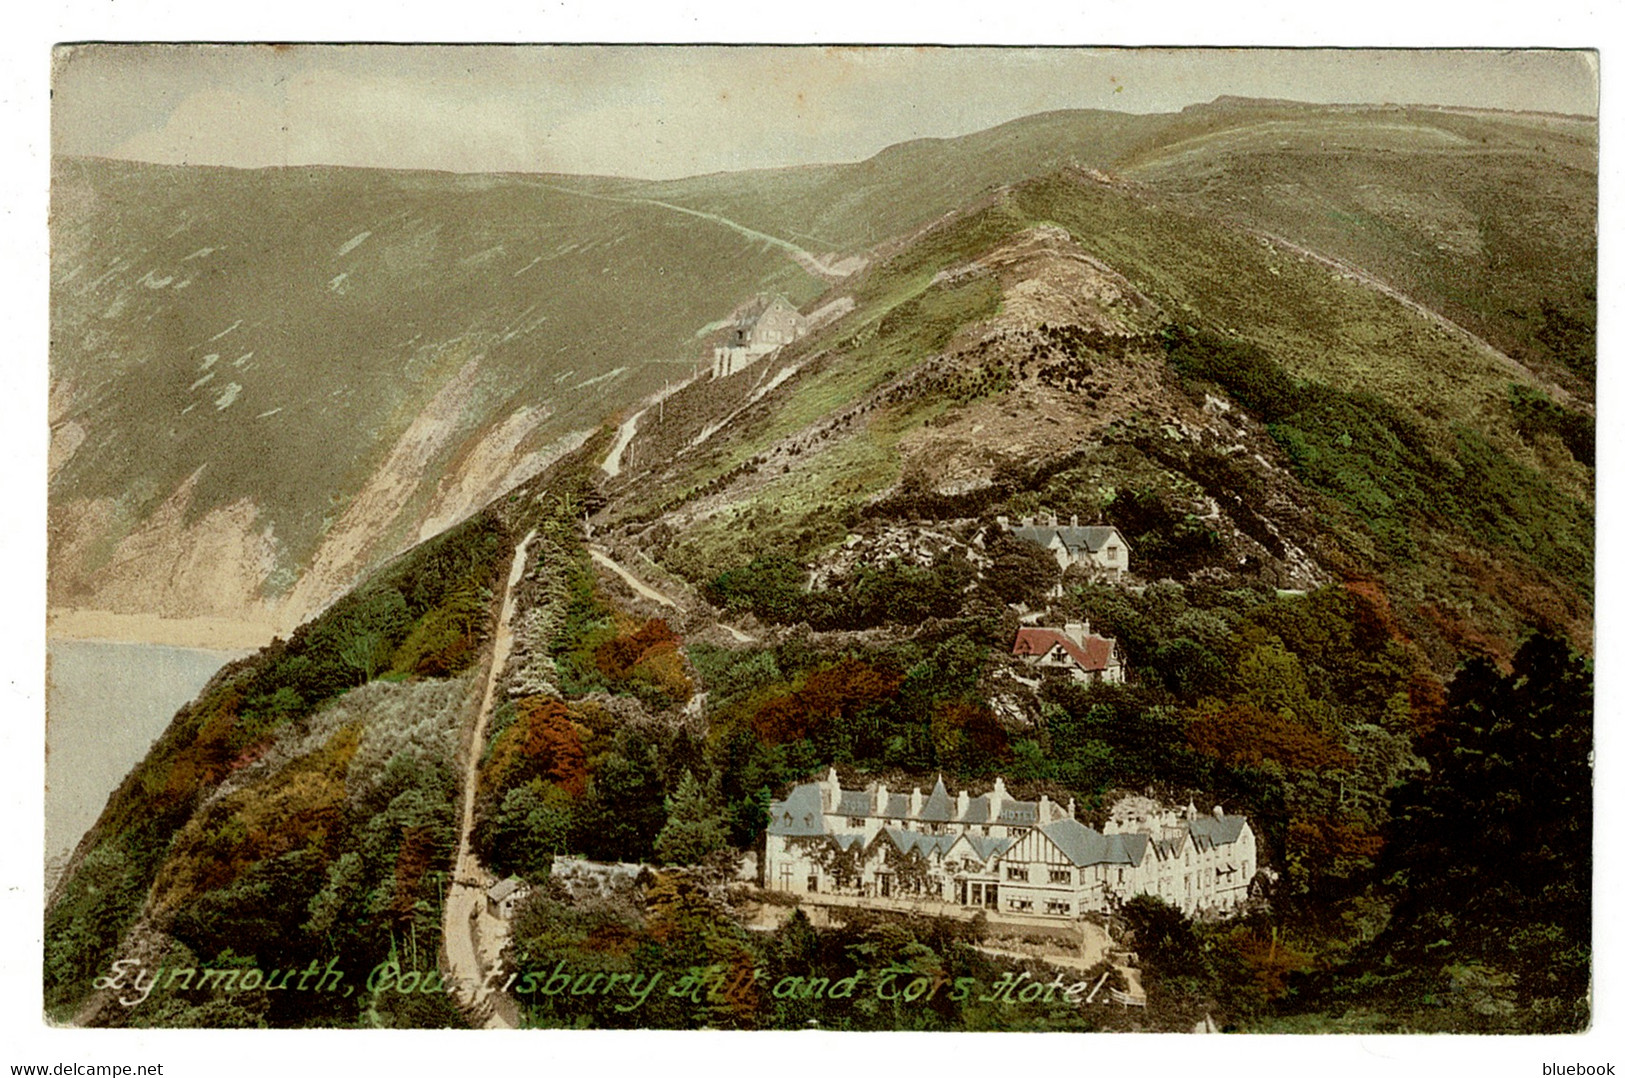 Ref 1498 - 1934 Postcard - Lynmouth Countisbury Hill & Tors Hotel - Devon - Lynmouth & Lynton